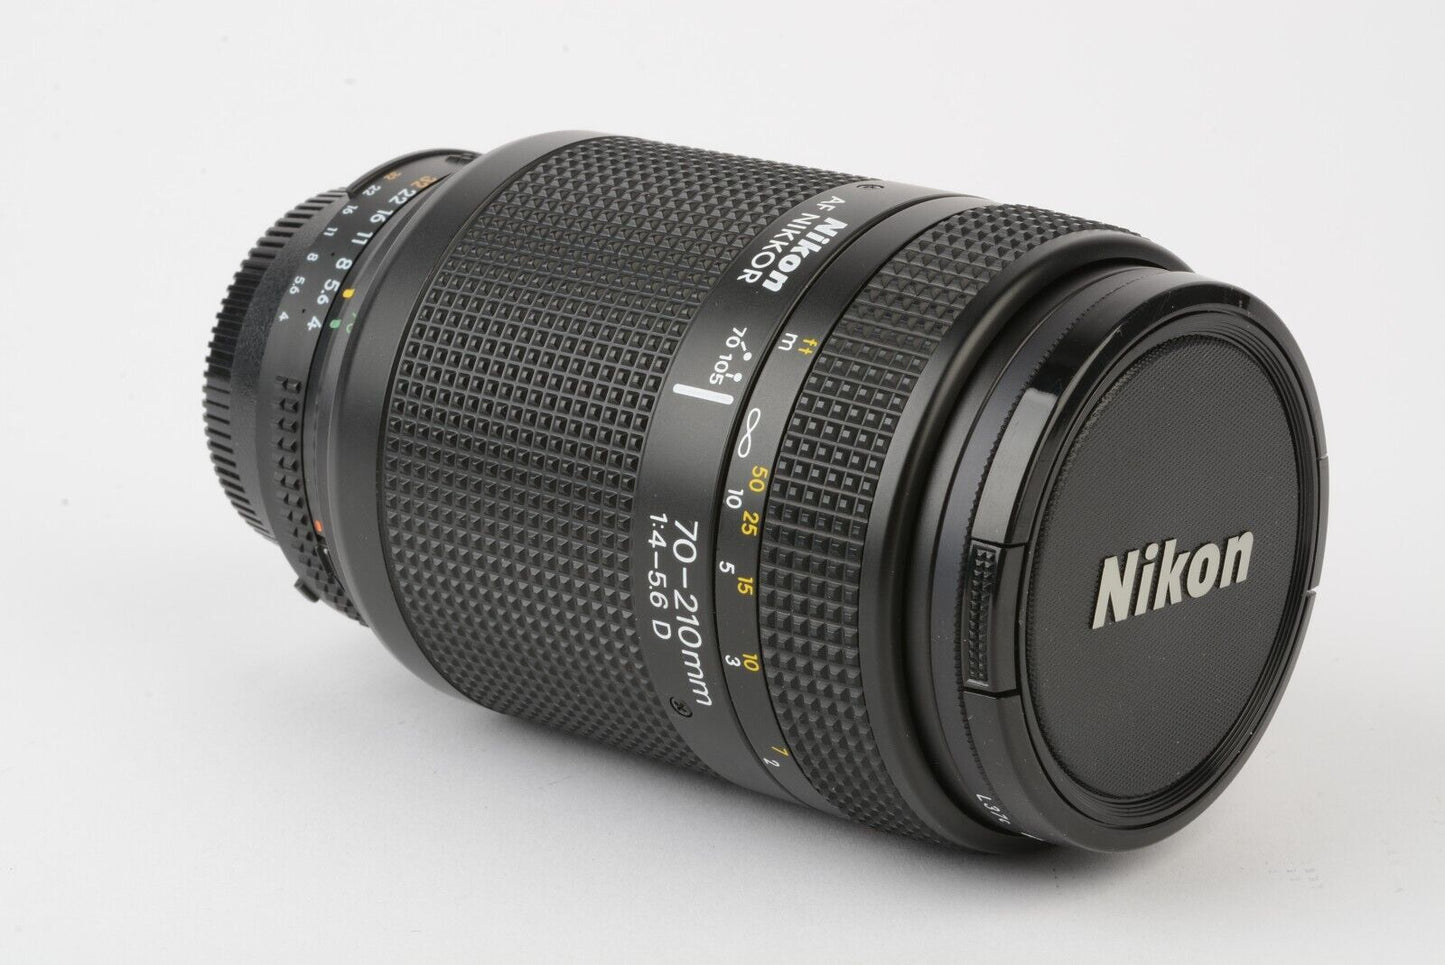 EXC++ NIKON NIKKOR AF 70-210mm F4-5.6D ZOOM LENS w/CAPS, UV, NICE & CLEAN